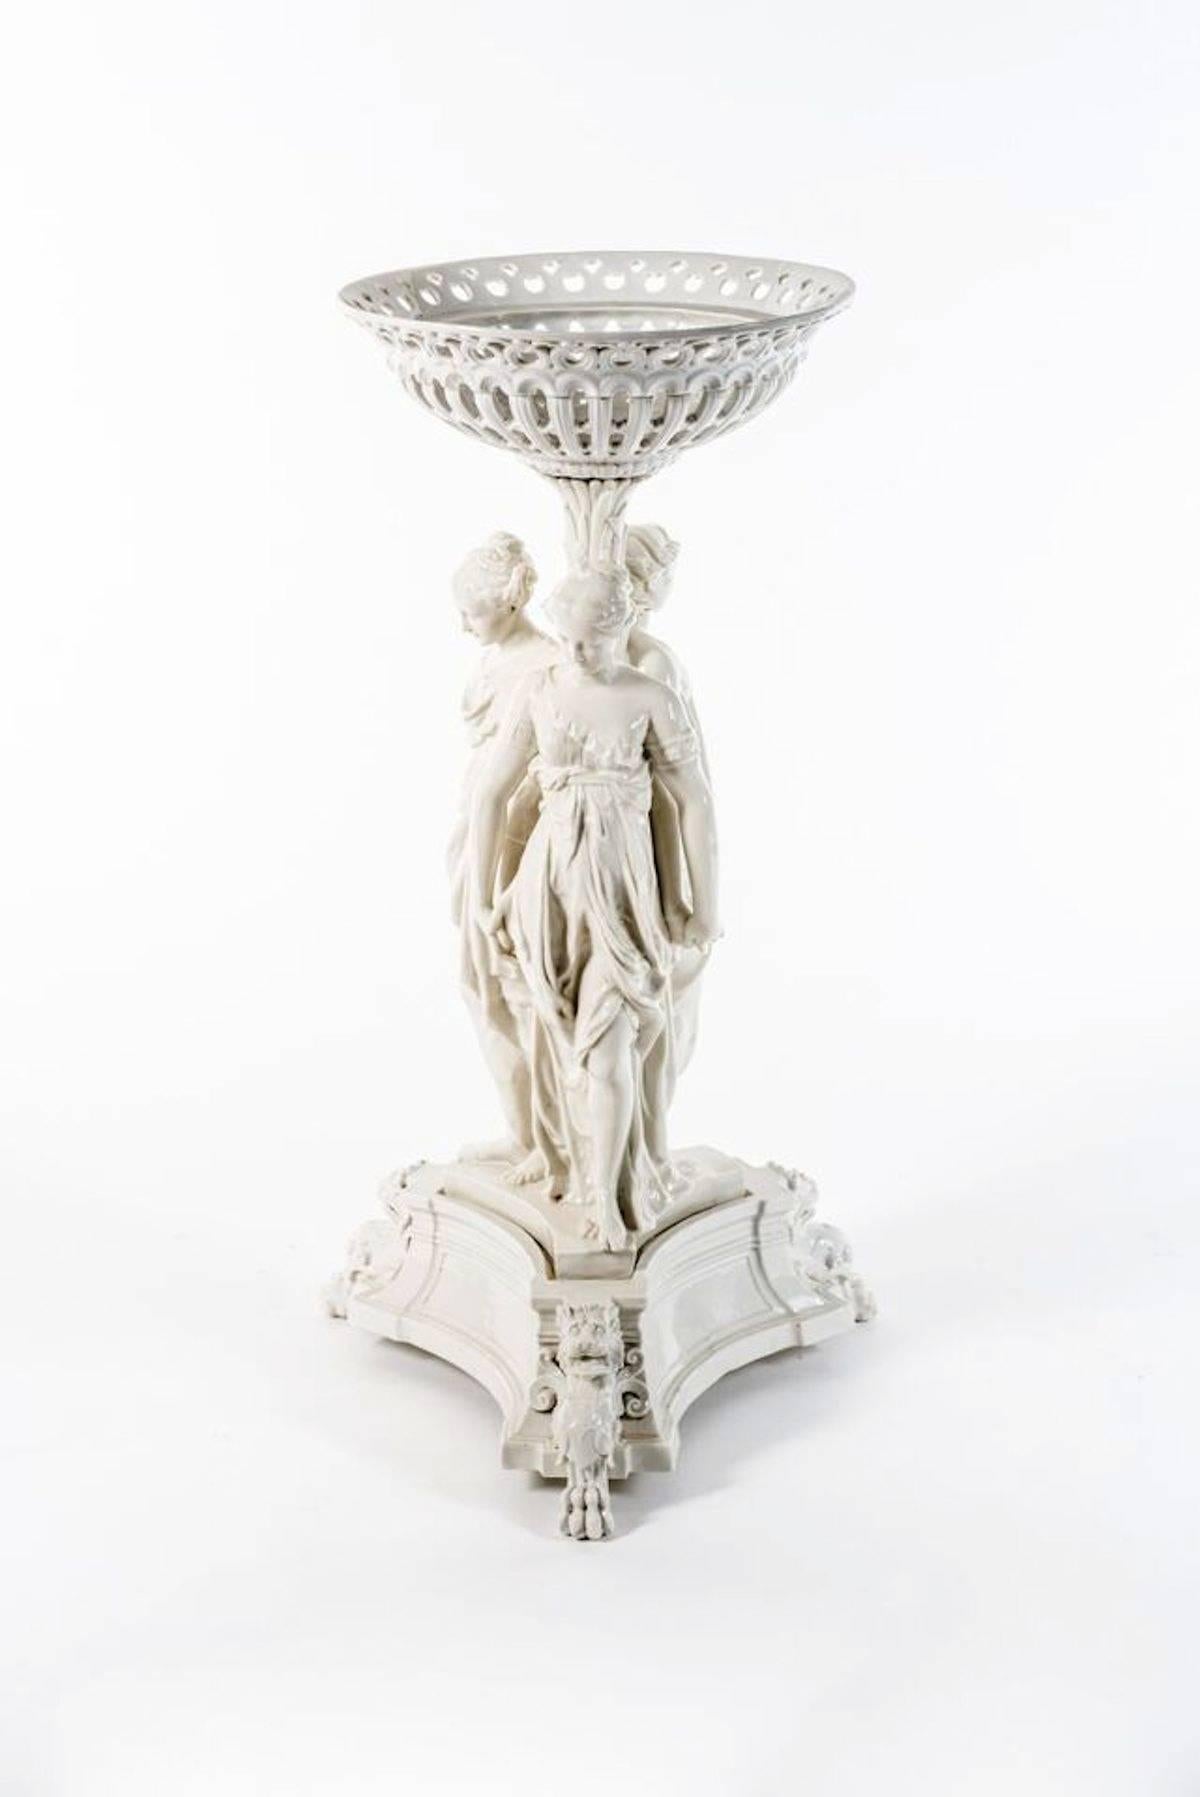 Very Fine Italian Porcelain 19th Century Table Center 5